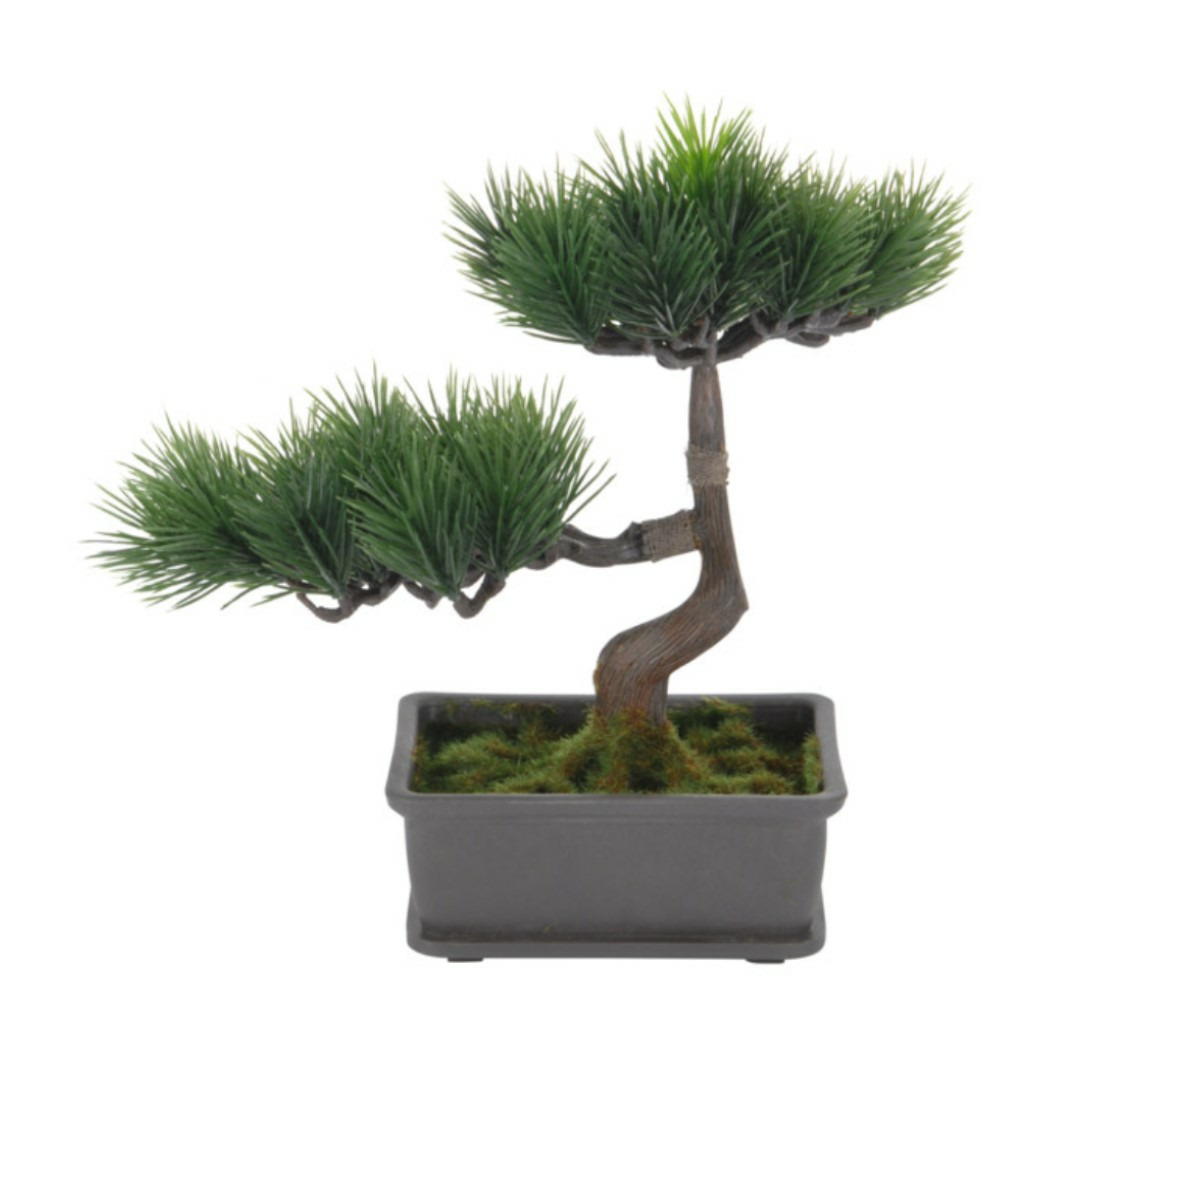 Kunstplant bonsai boompje in pot Japans decoratie 27 cm dennen naalden